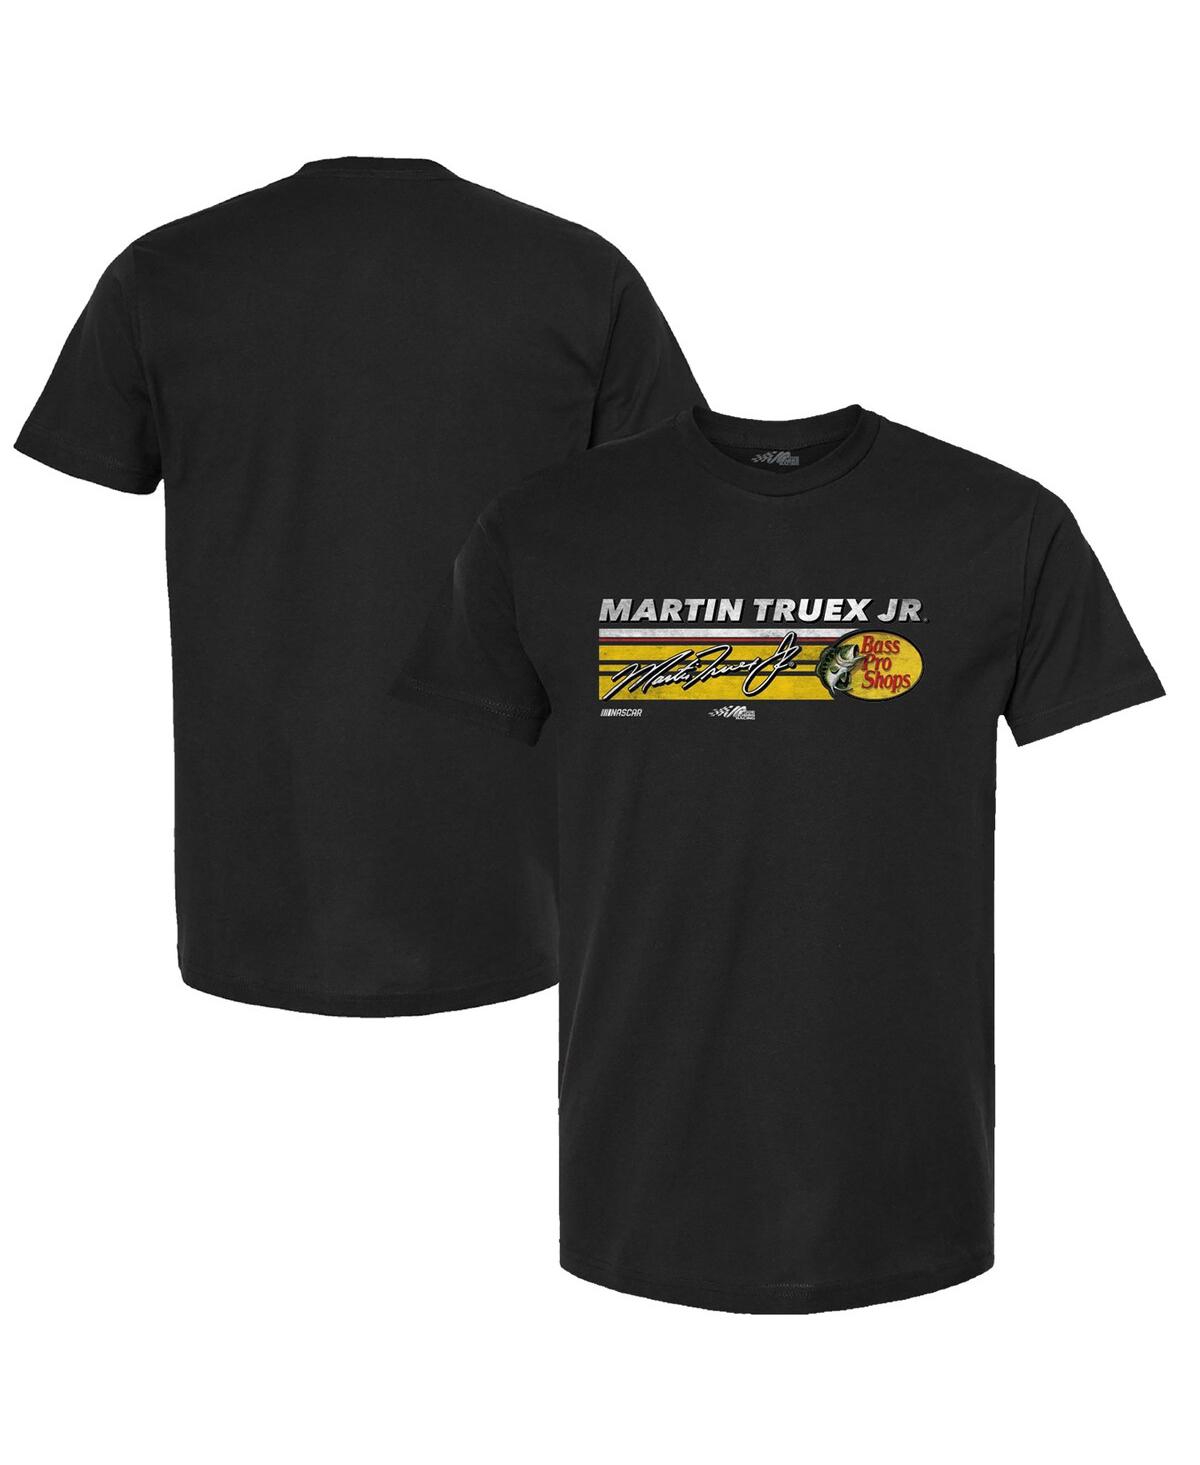 Men's Richard Childress Racing Team Collection Black Martin Truex Jr Hot Lap T-shirt - Black